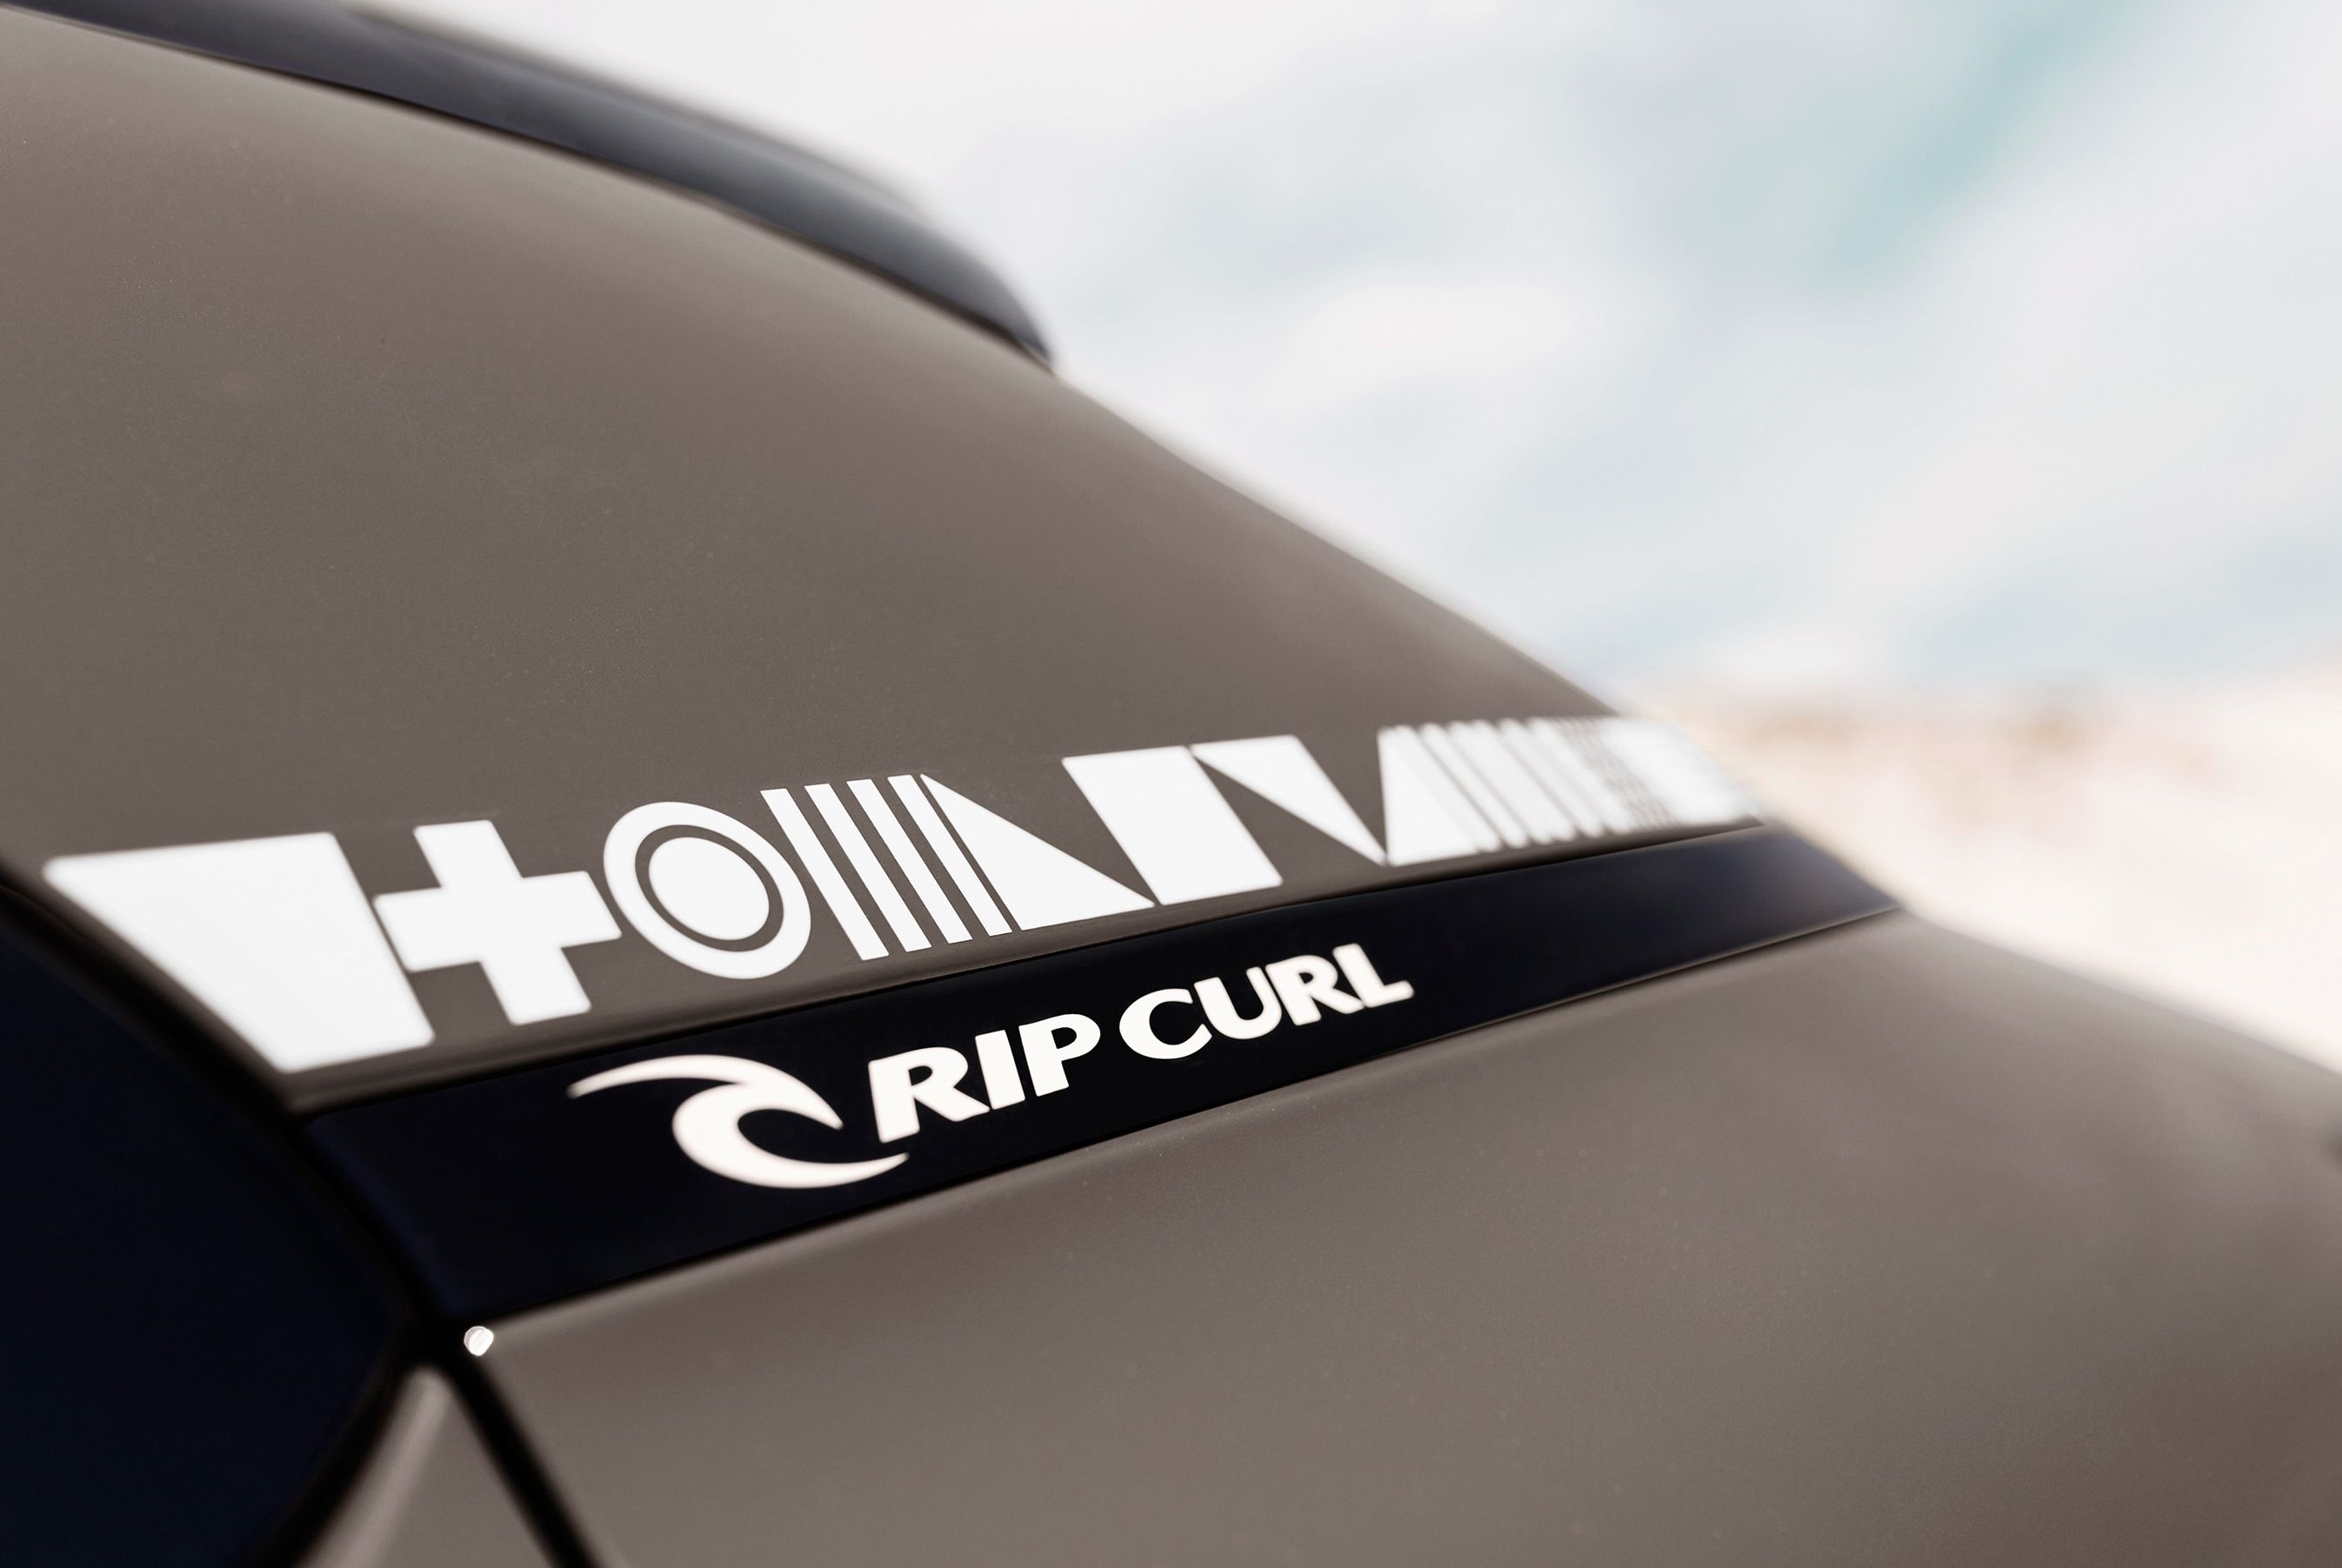 2016 Citroën C4 Cactus Rip Curl Special Edition